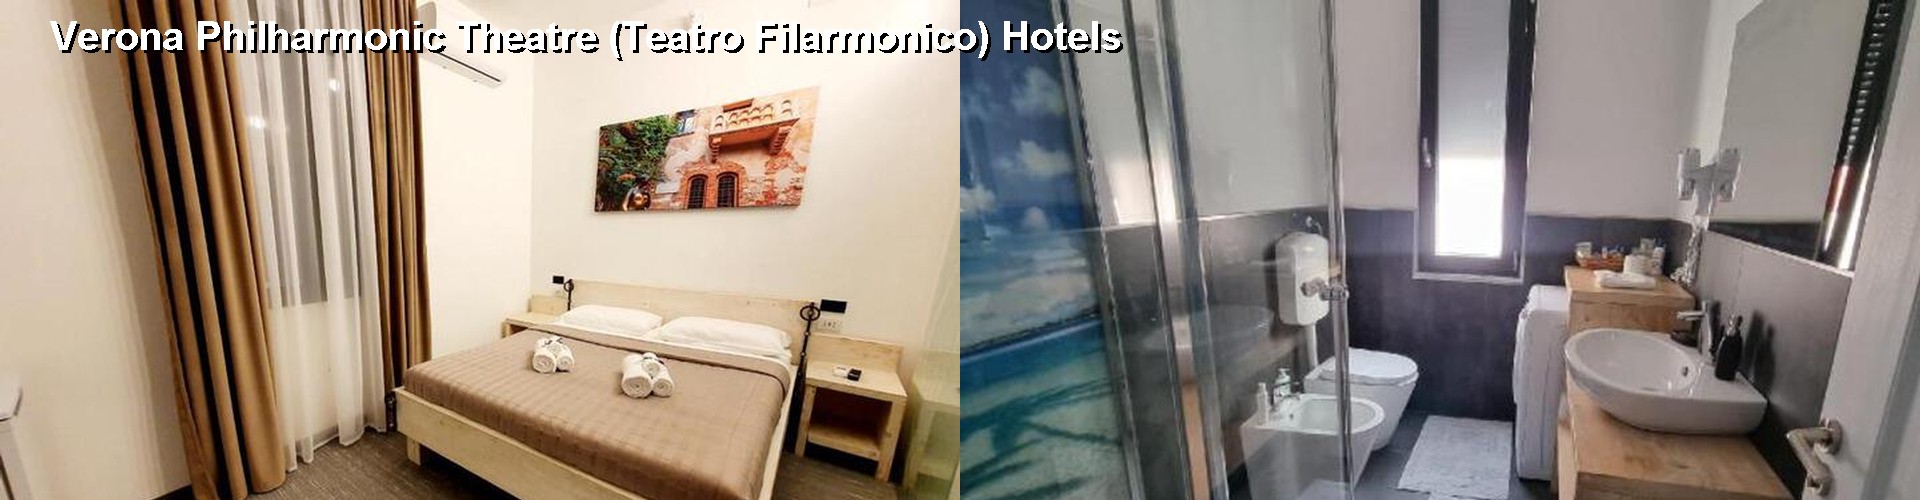 5 Best Hotels near Verona Philharmonic Theatre (Teatro Filarmonico)